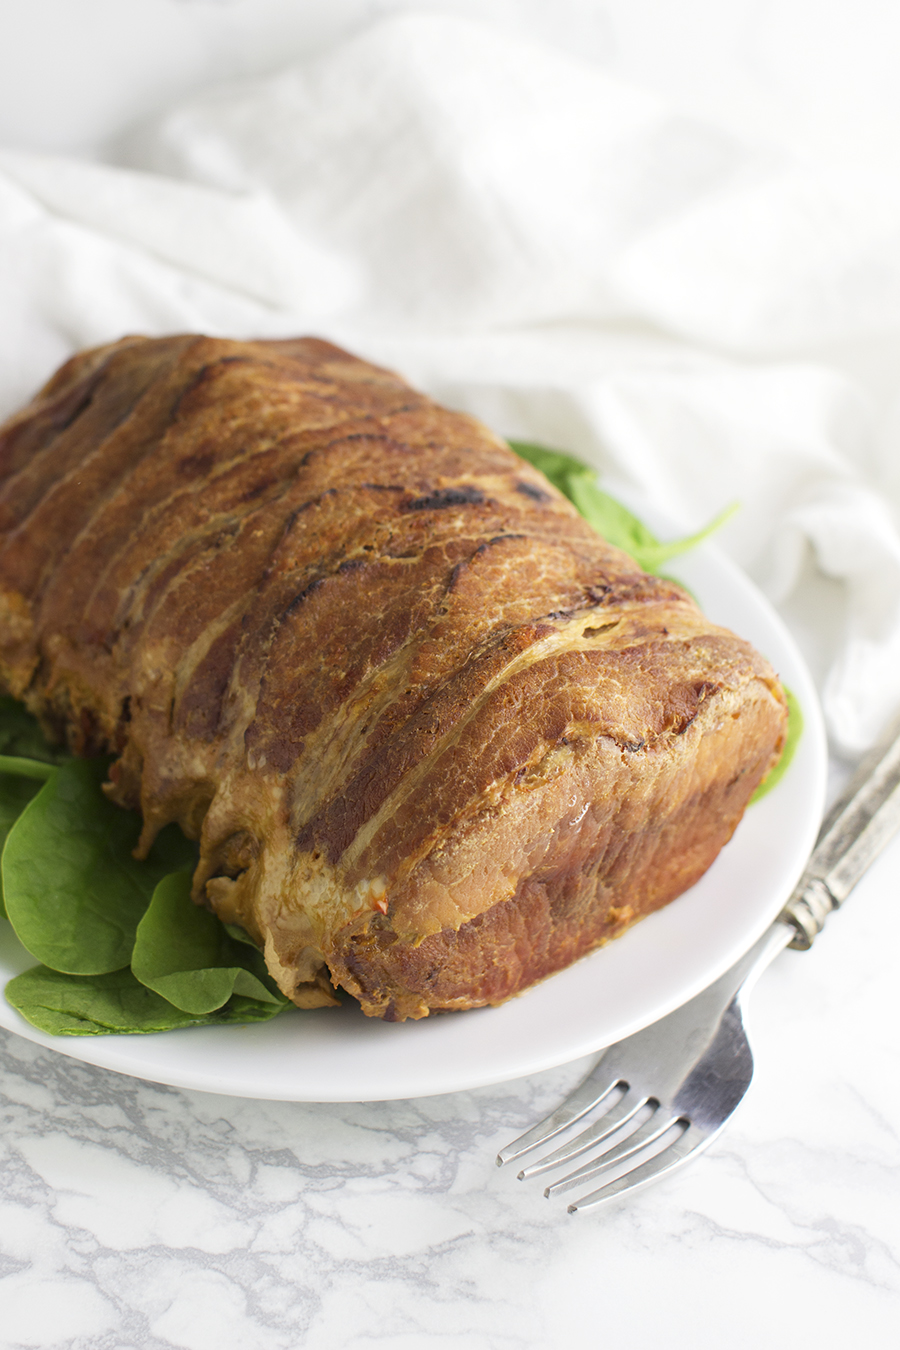 Bacon Wrapped Pork Roast recipe from acleanplate.com #paleo #aip #glutenfree